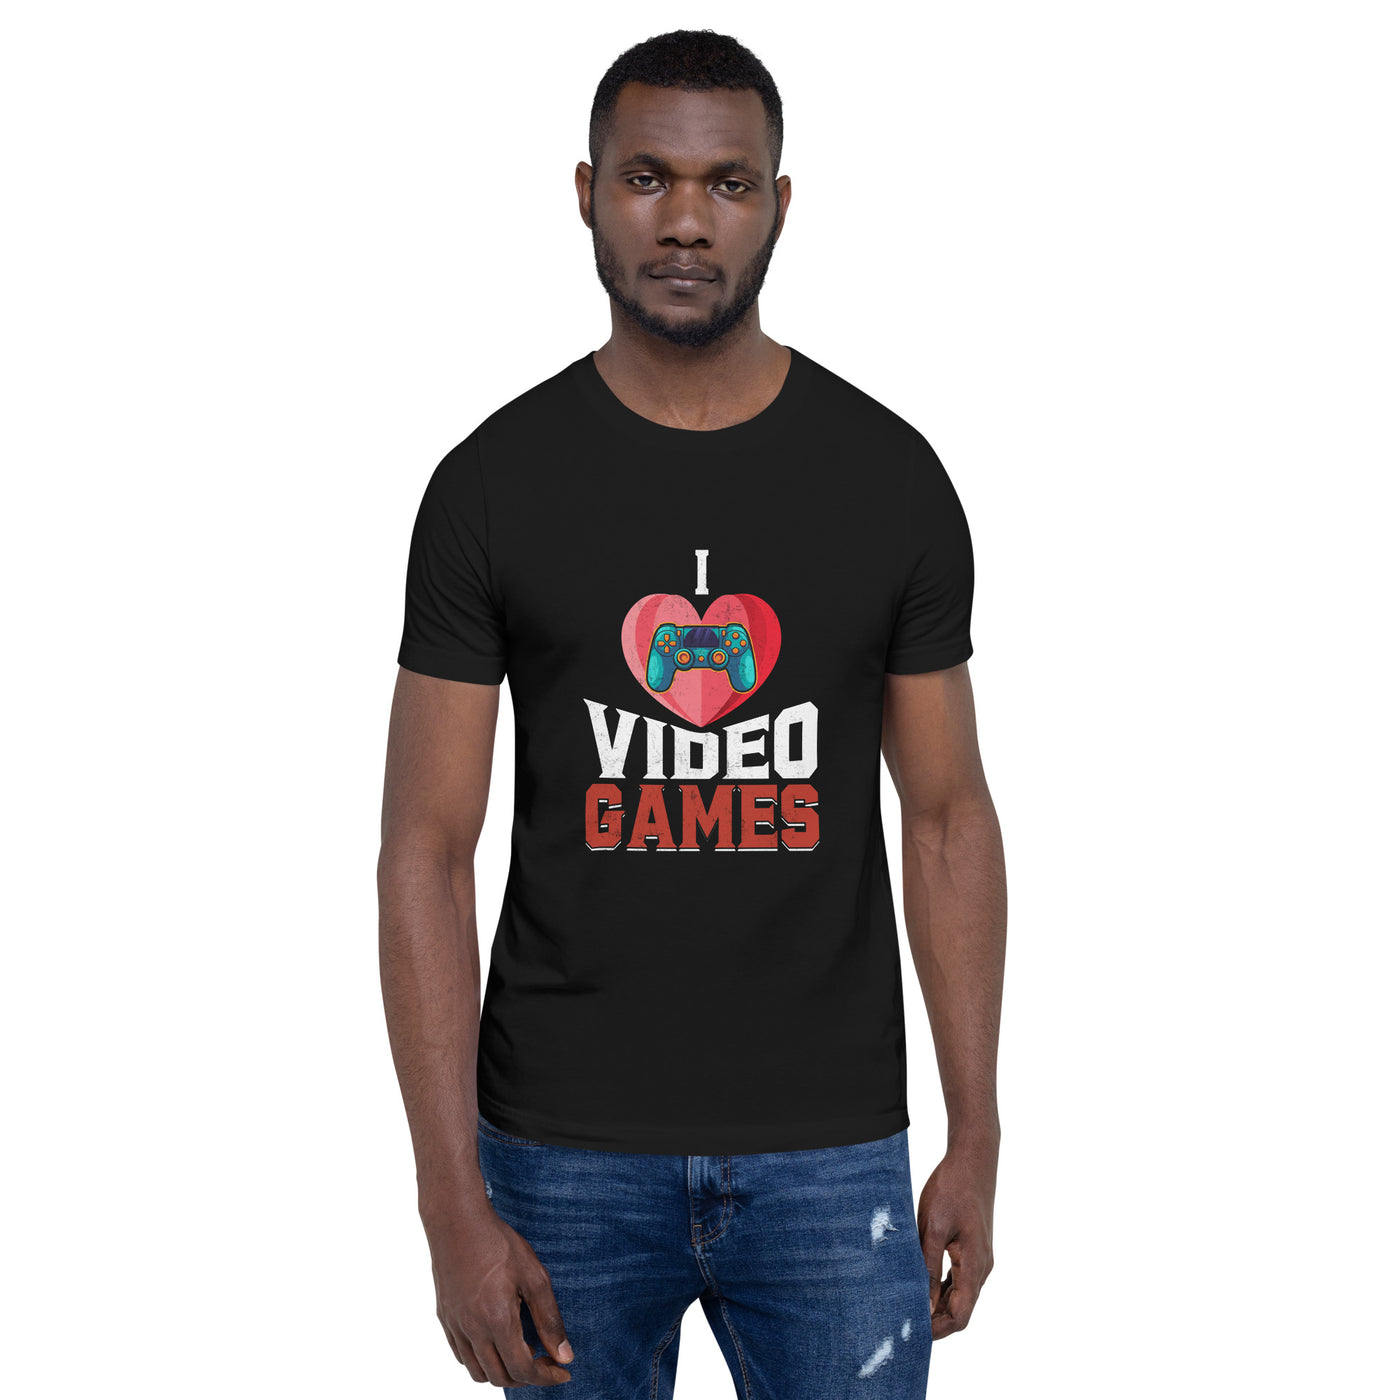 I love Video Games - Unisex t-shirt